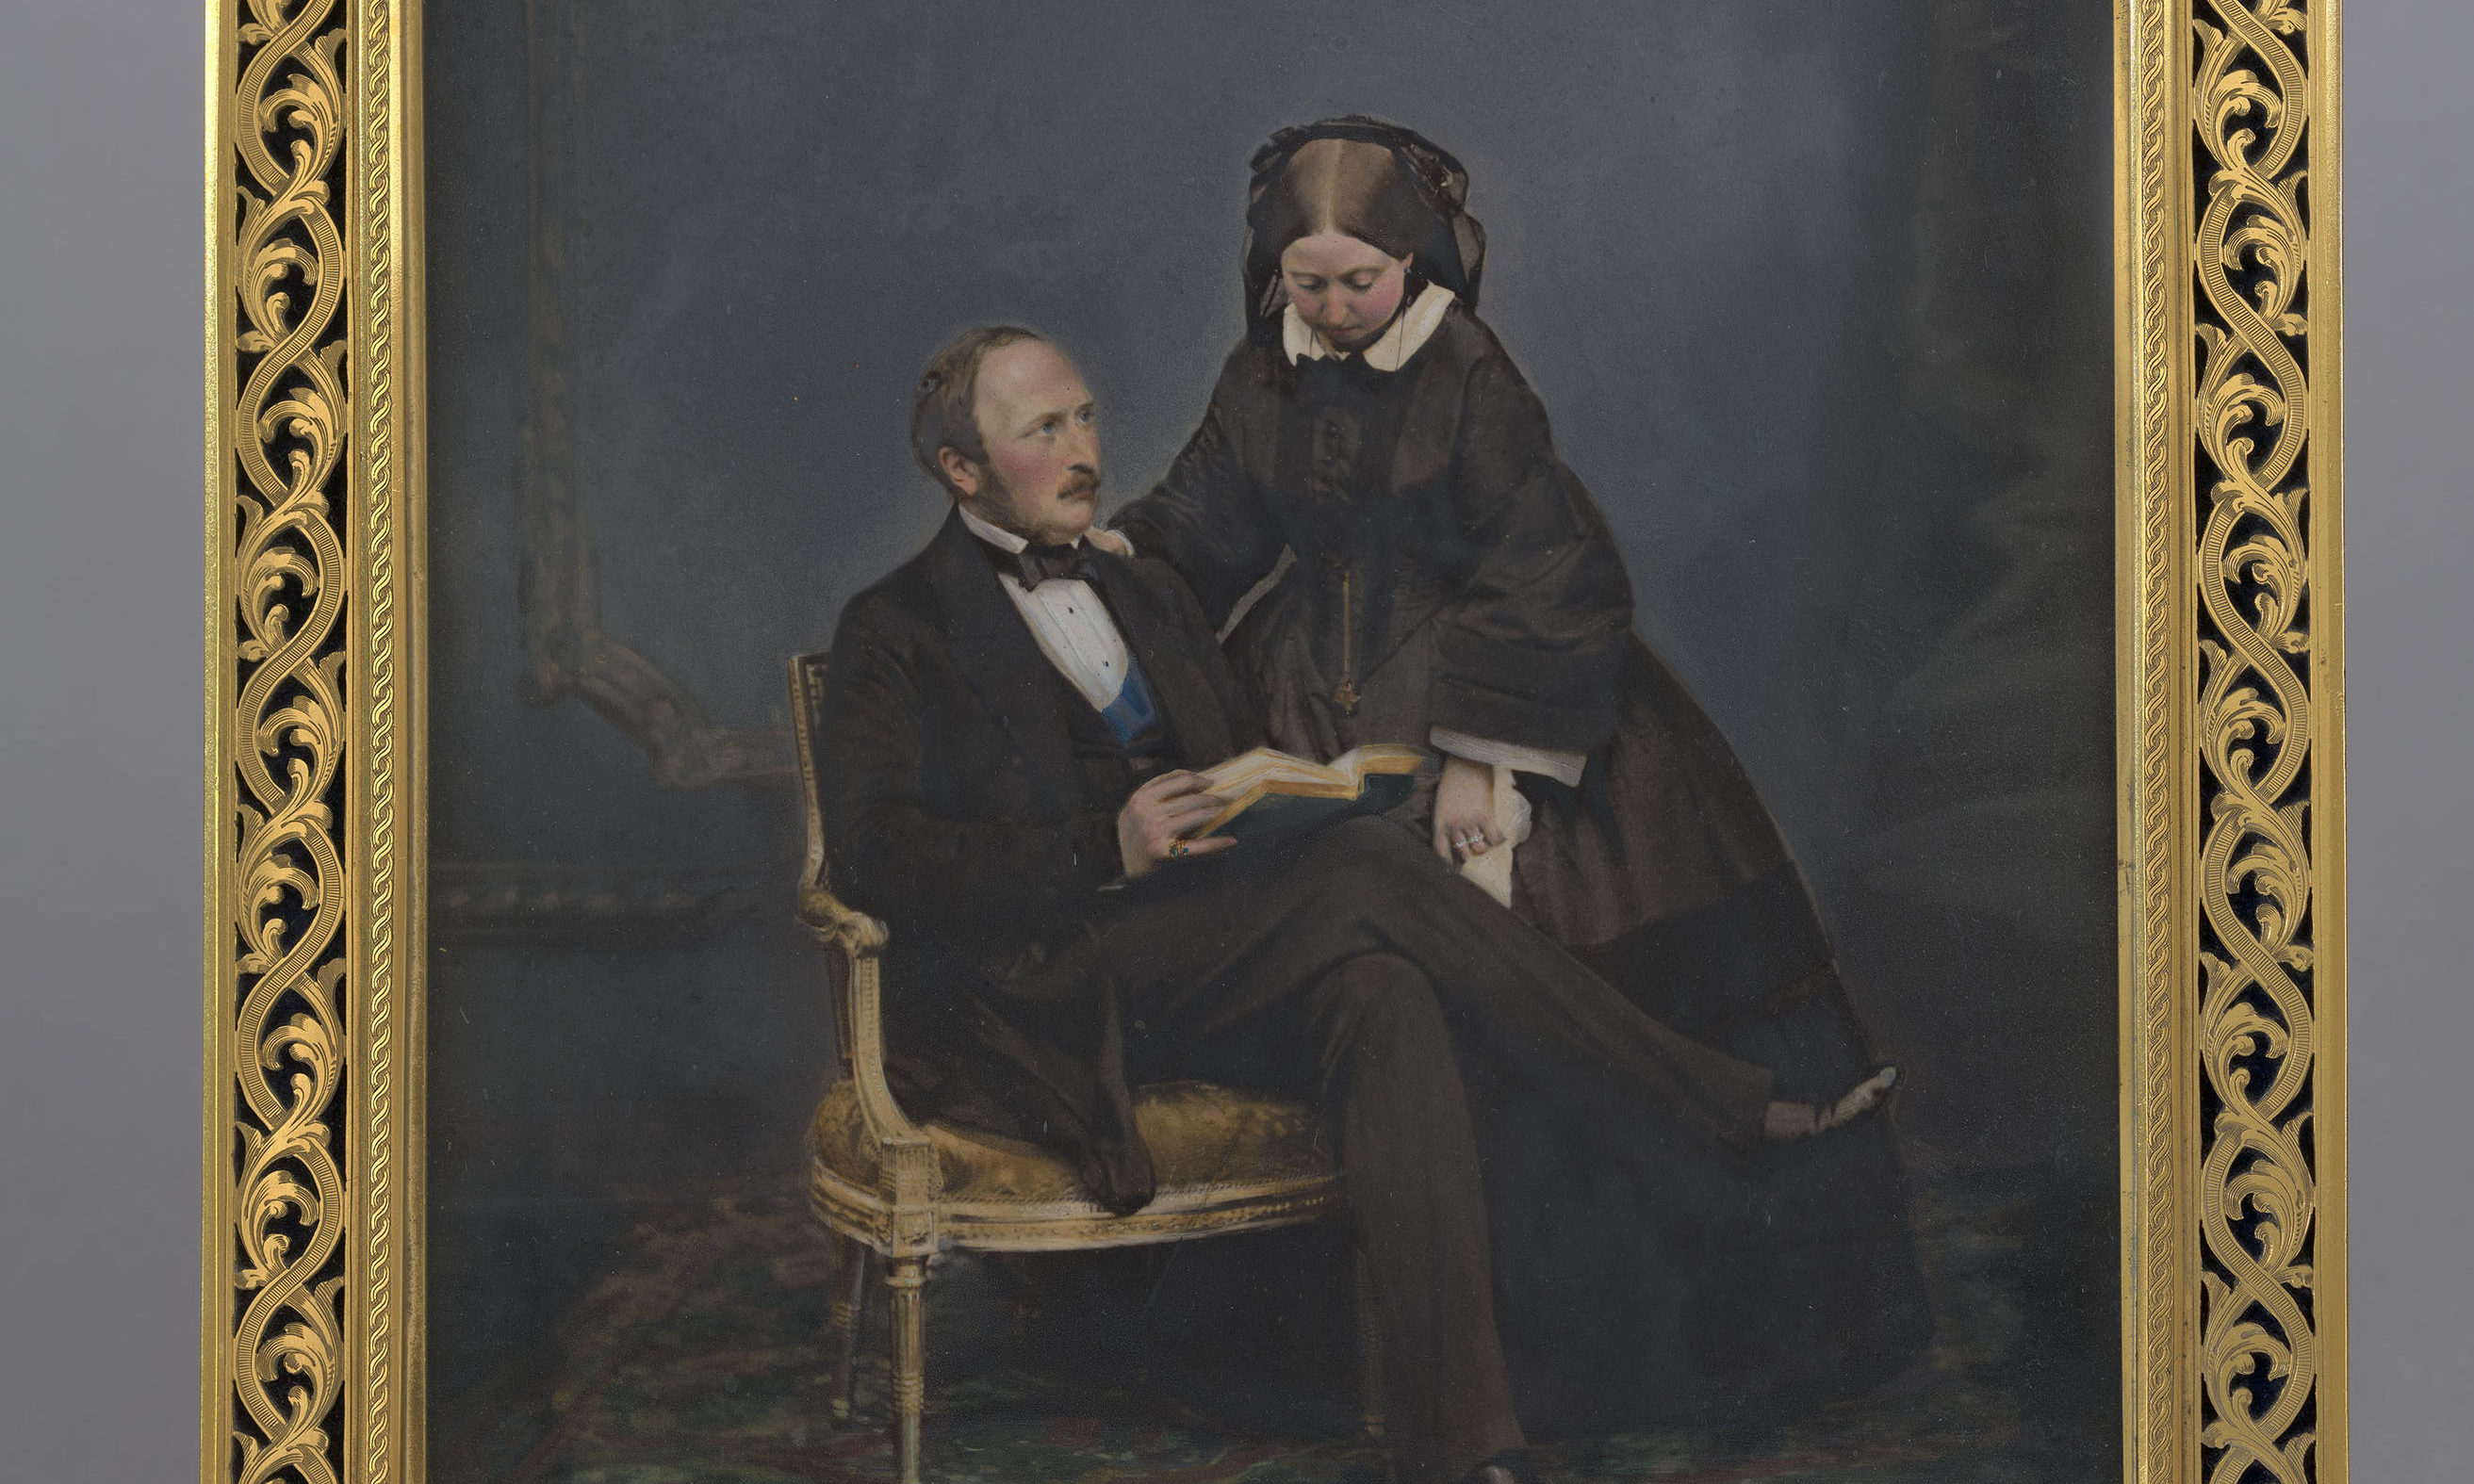 Queen Victoria and Prince Albert, 1860